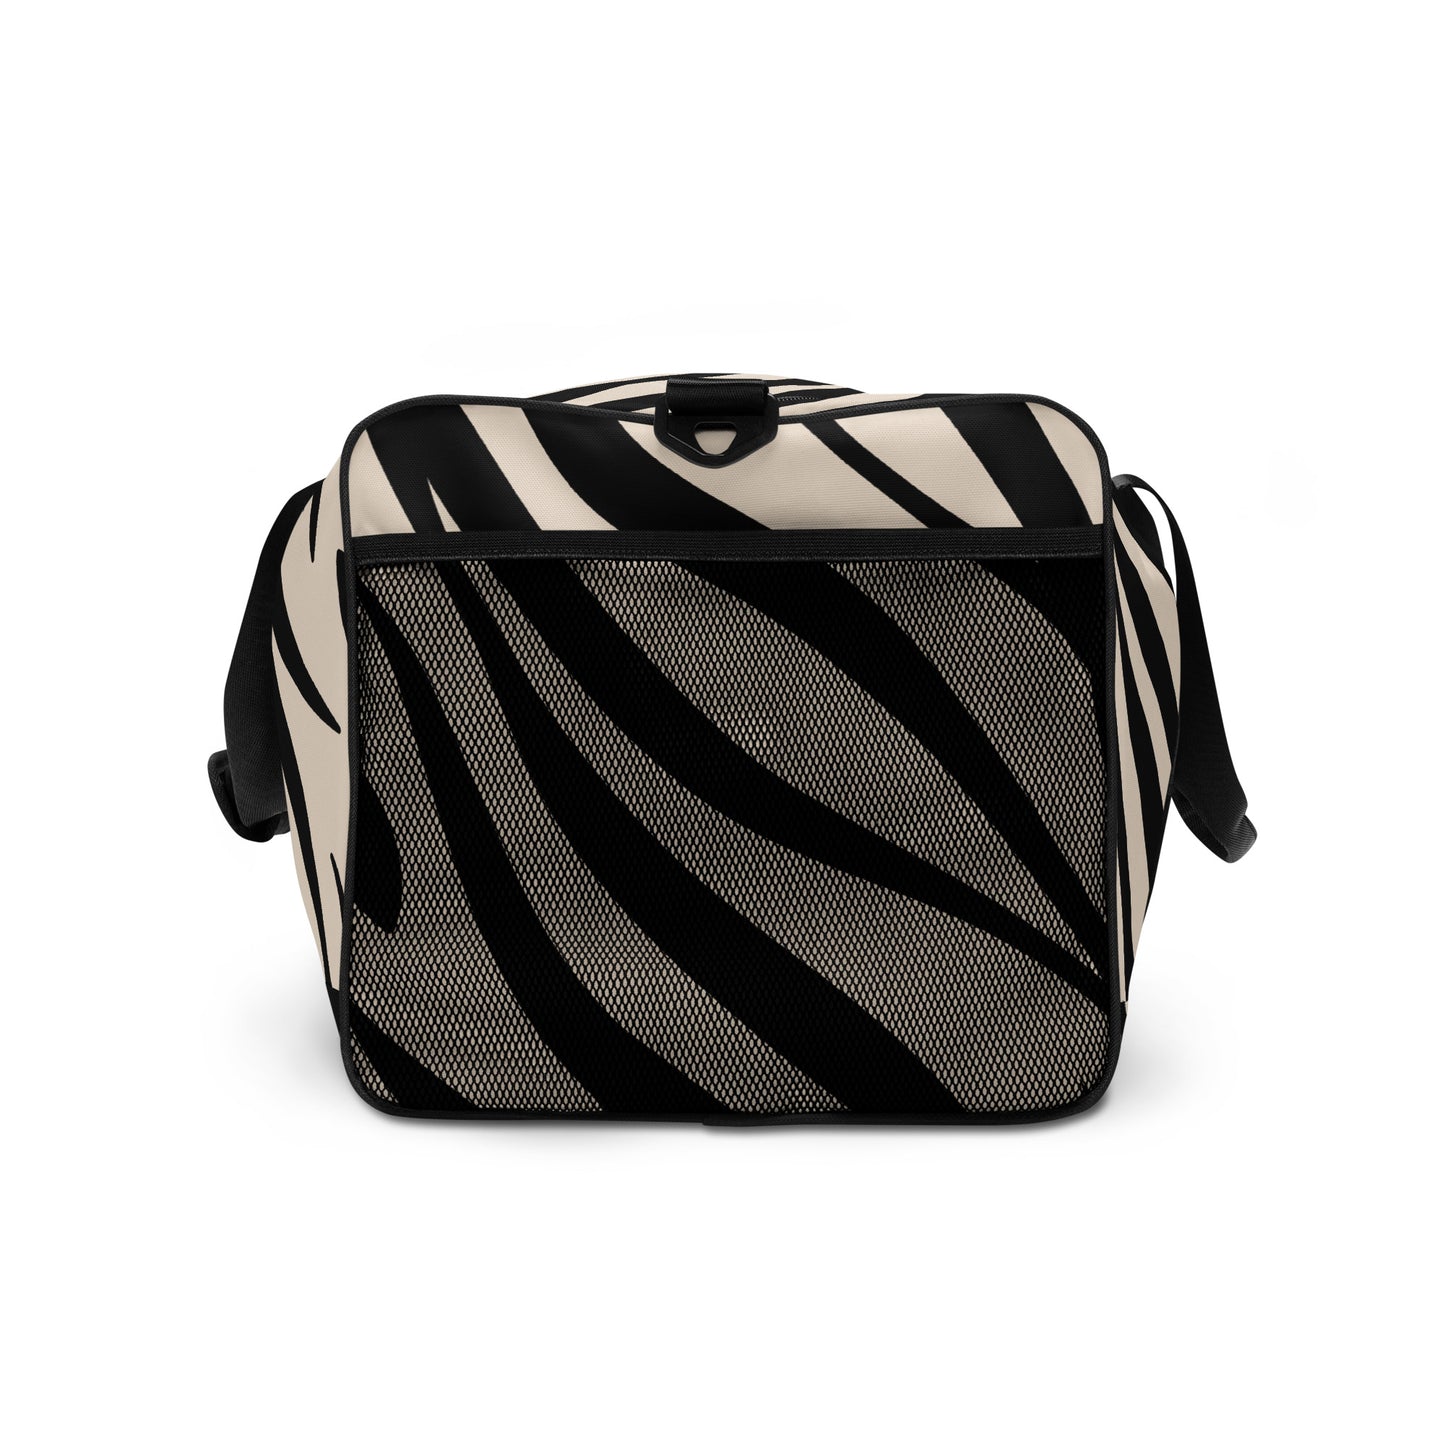 The Clean Living Project Duffle Bag (zebra)